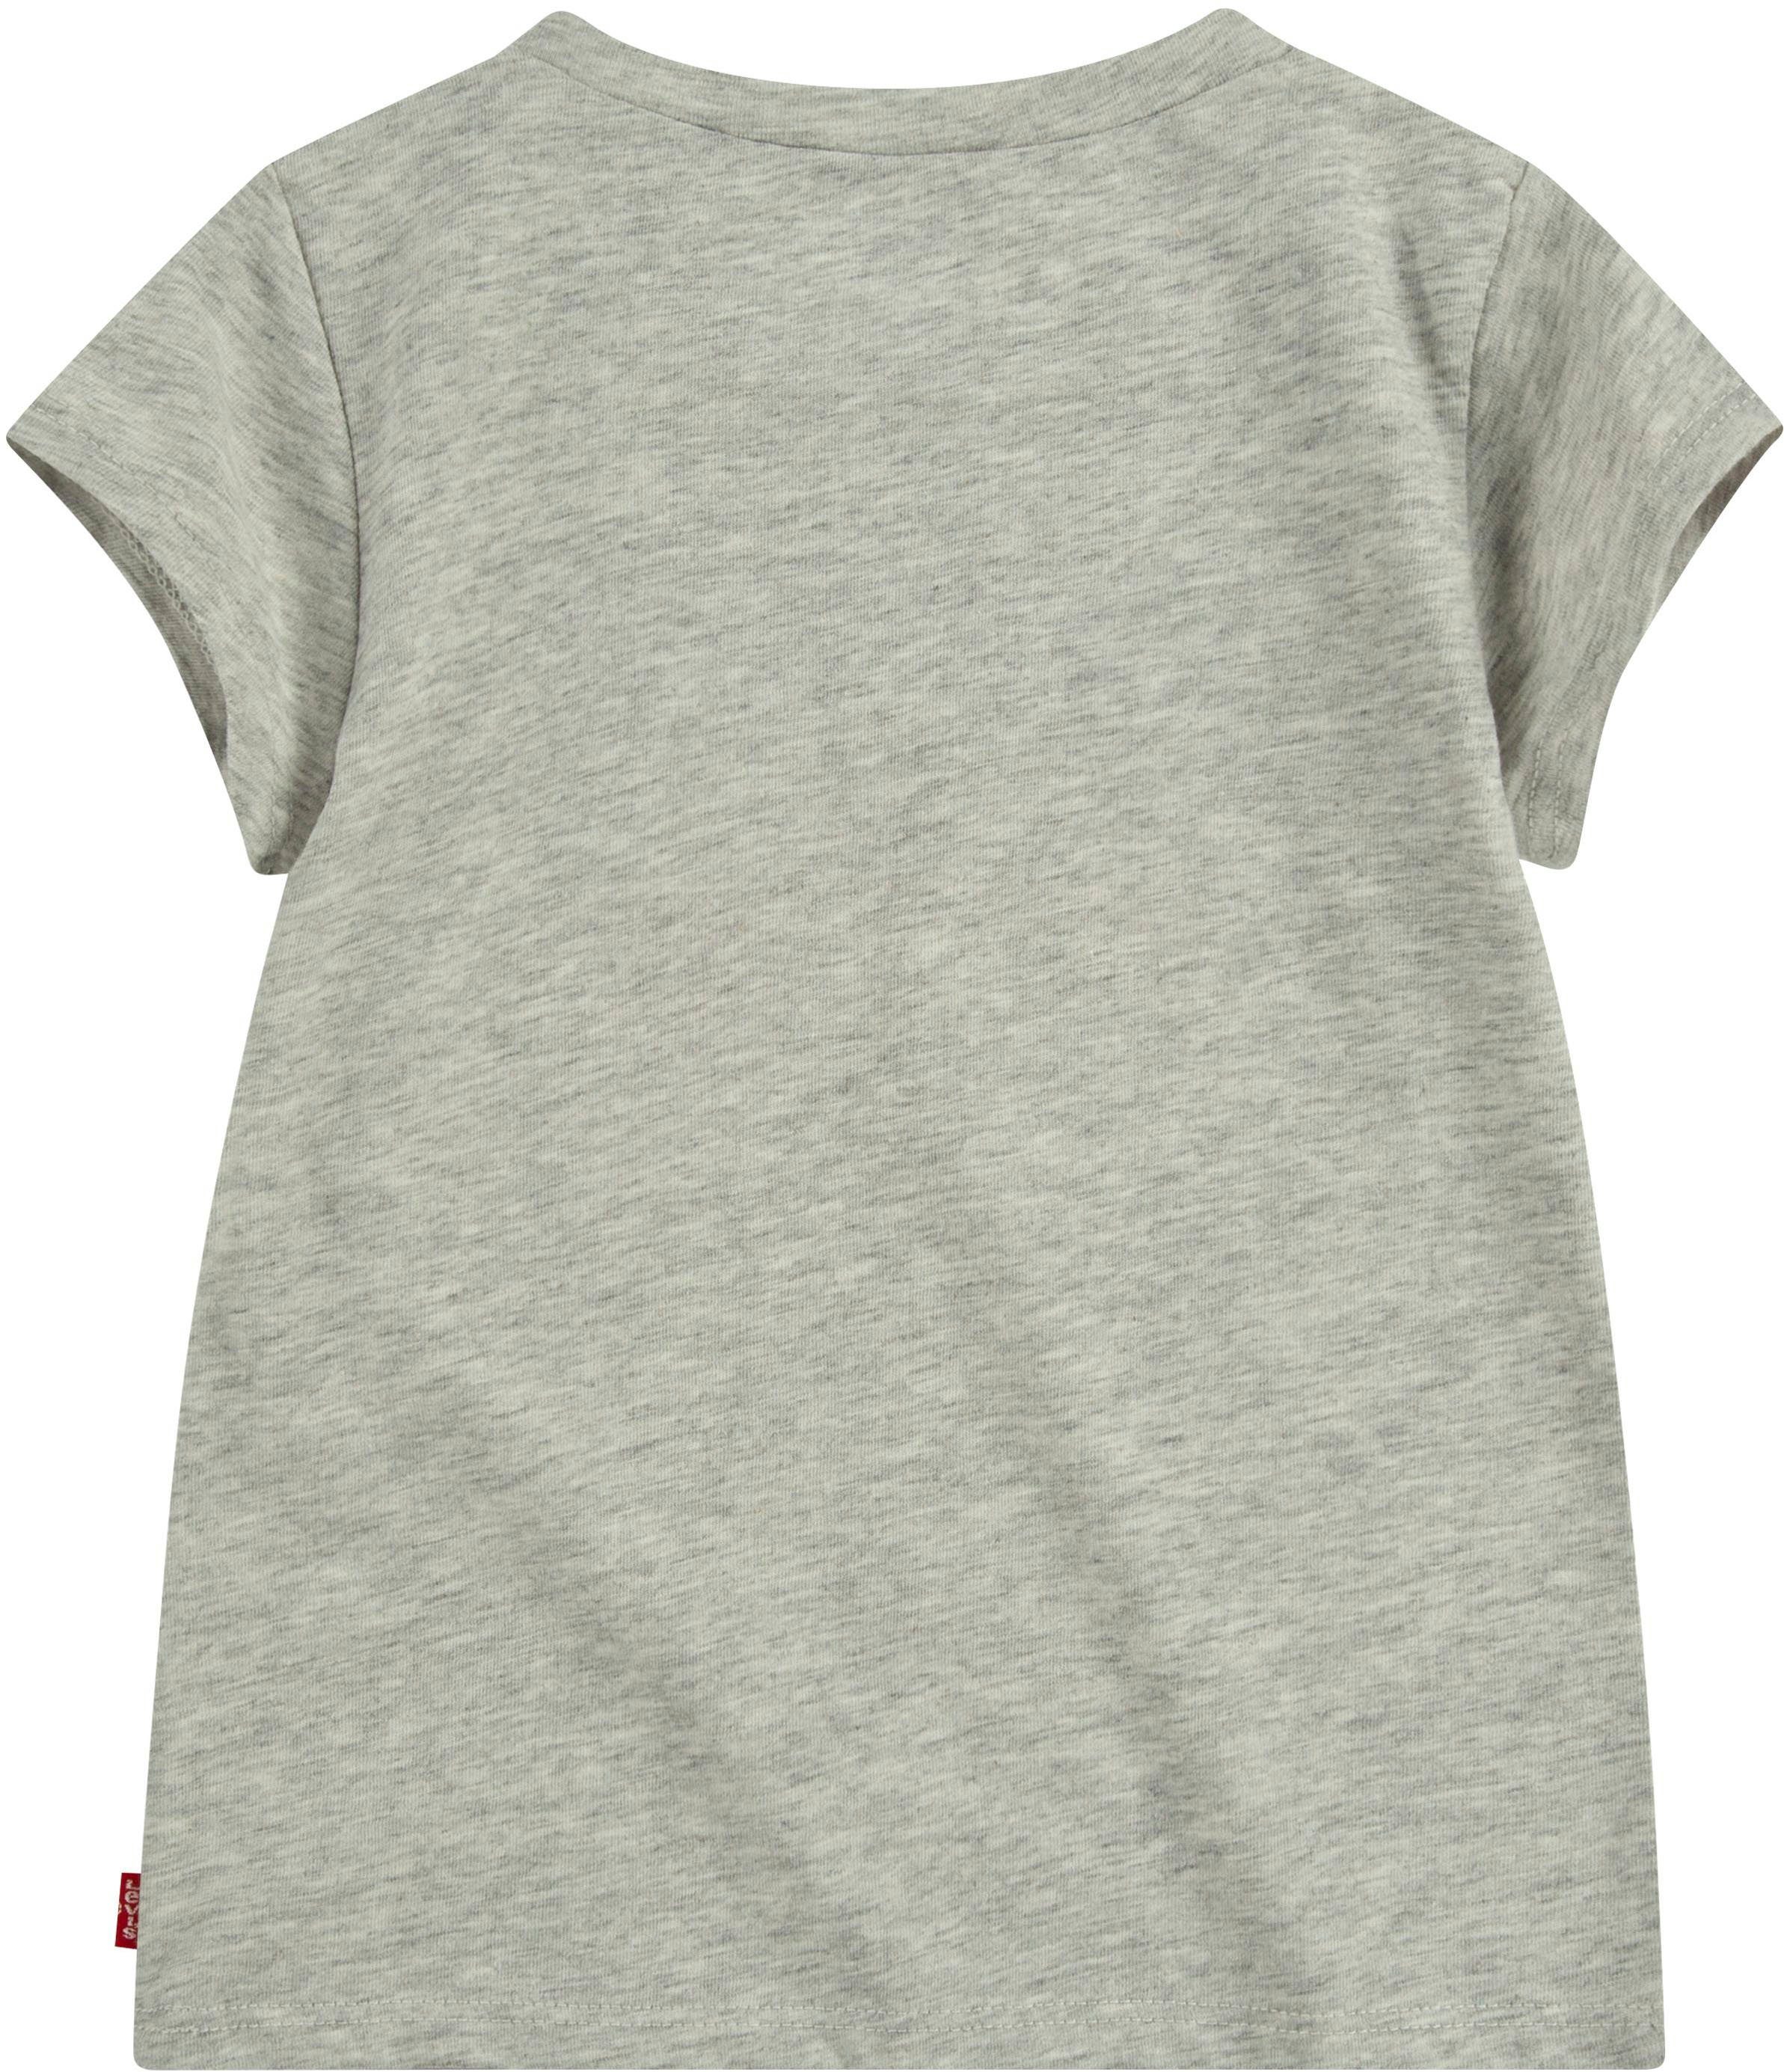 Levi's® Kids GIRLS grau-meliert T-Shirt for